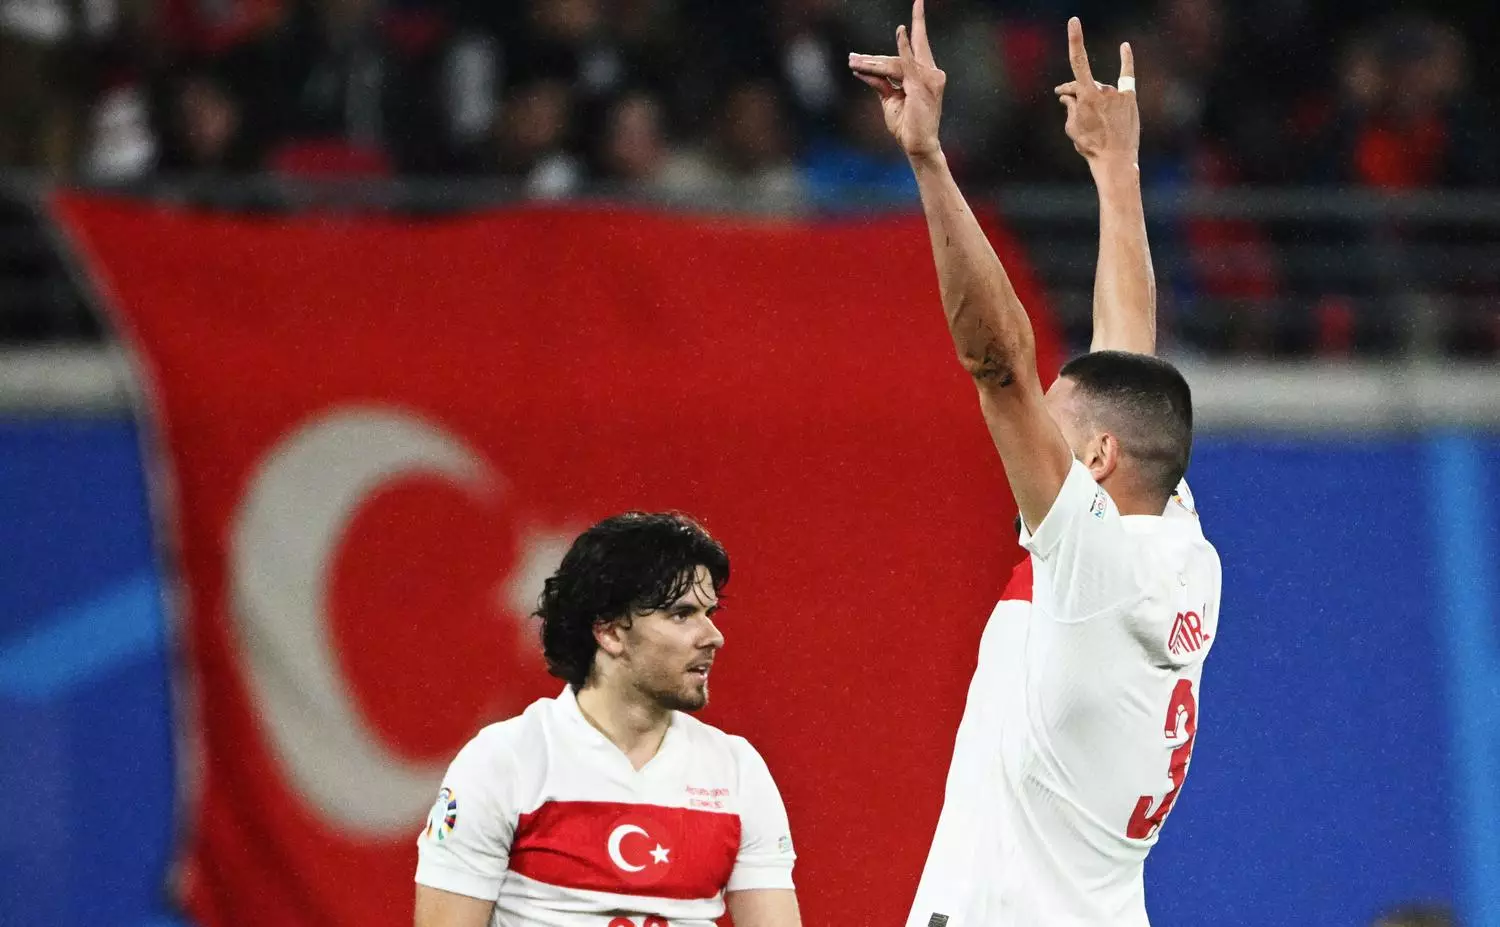 УЕФА наказал турка за националистический жест. Что происходит на Евро